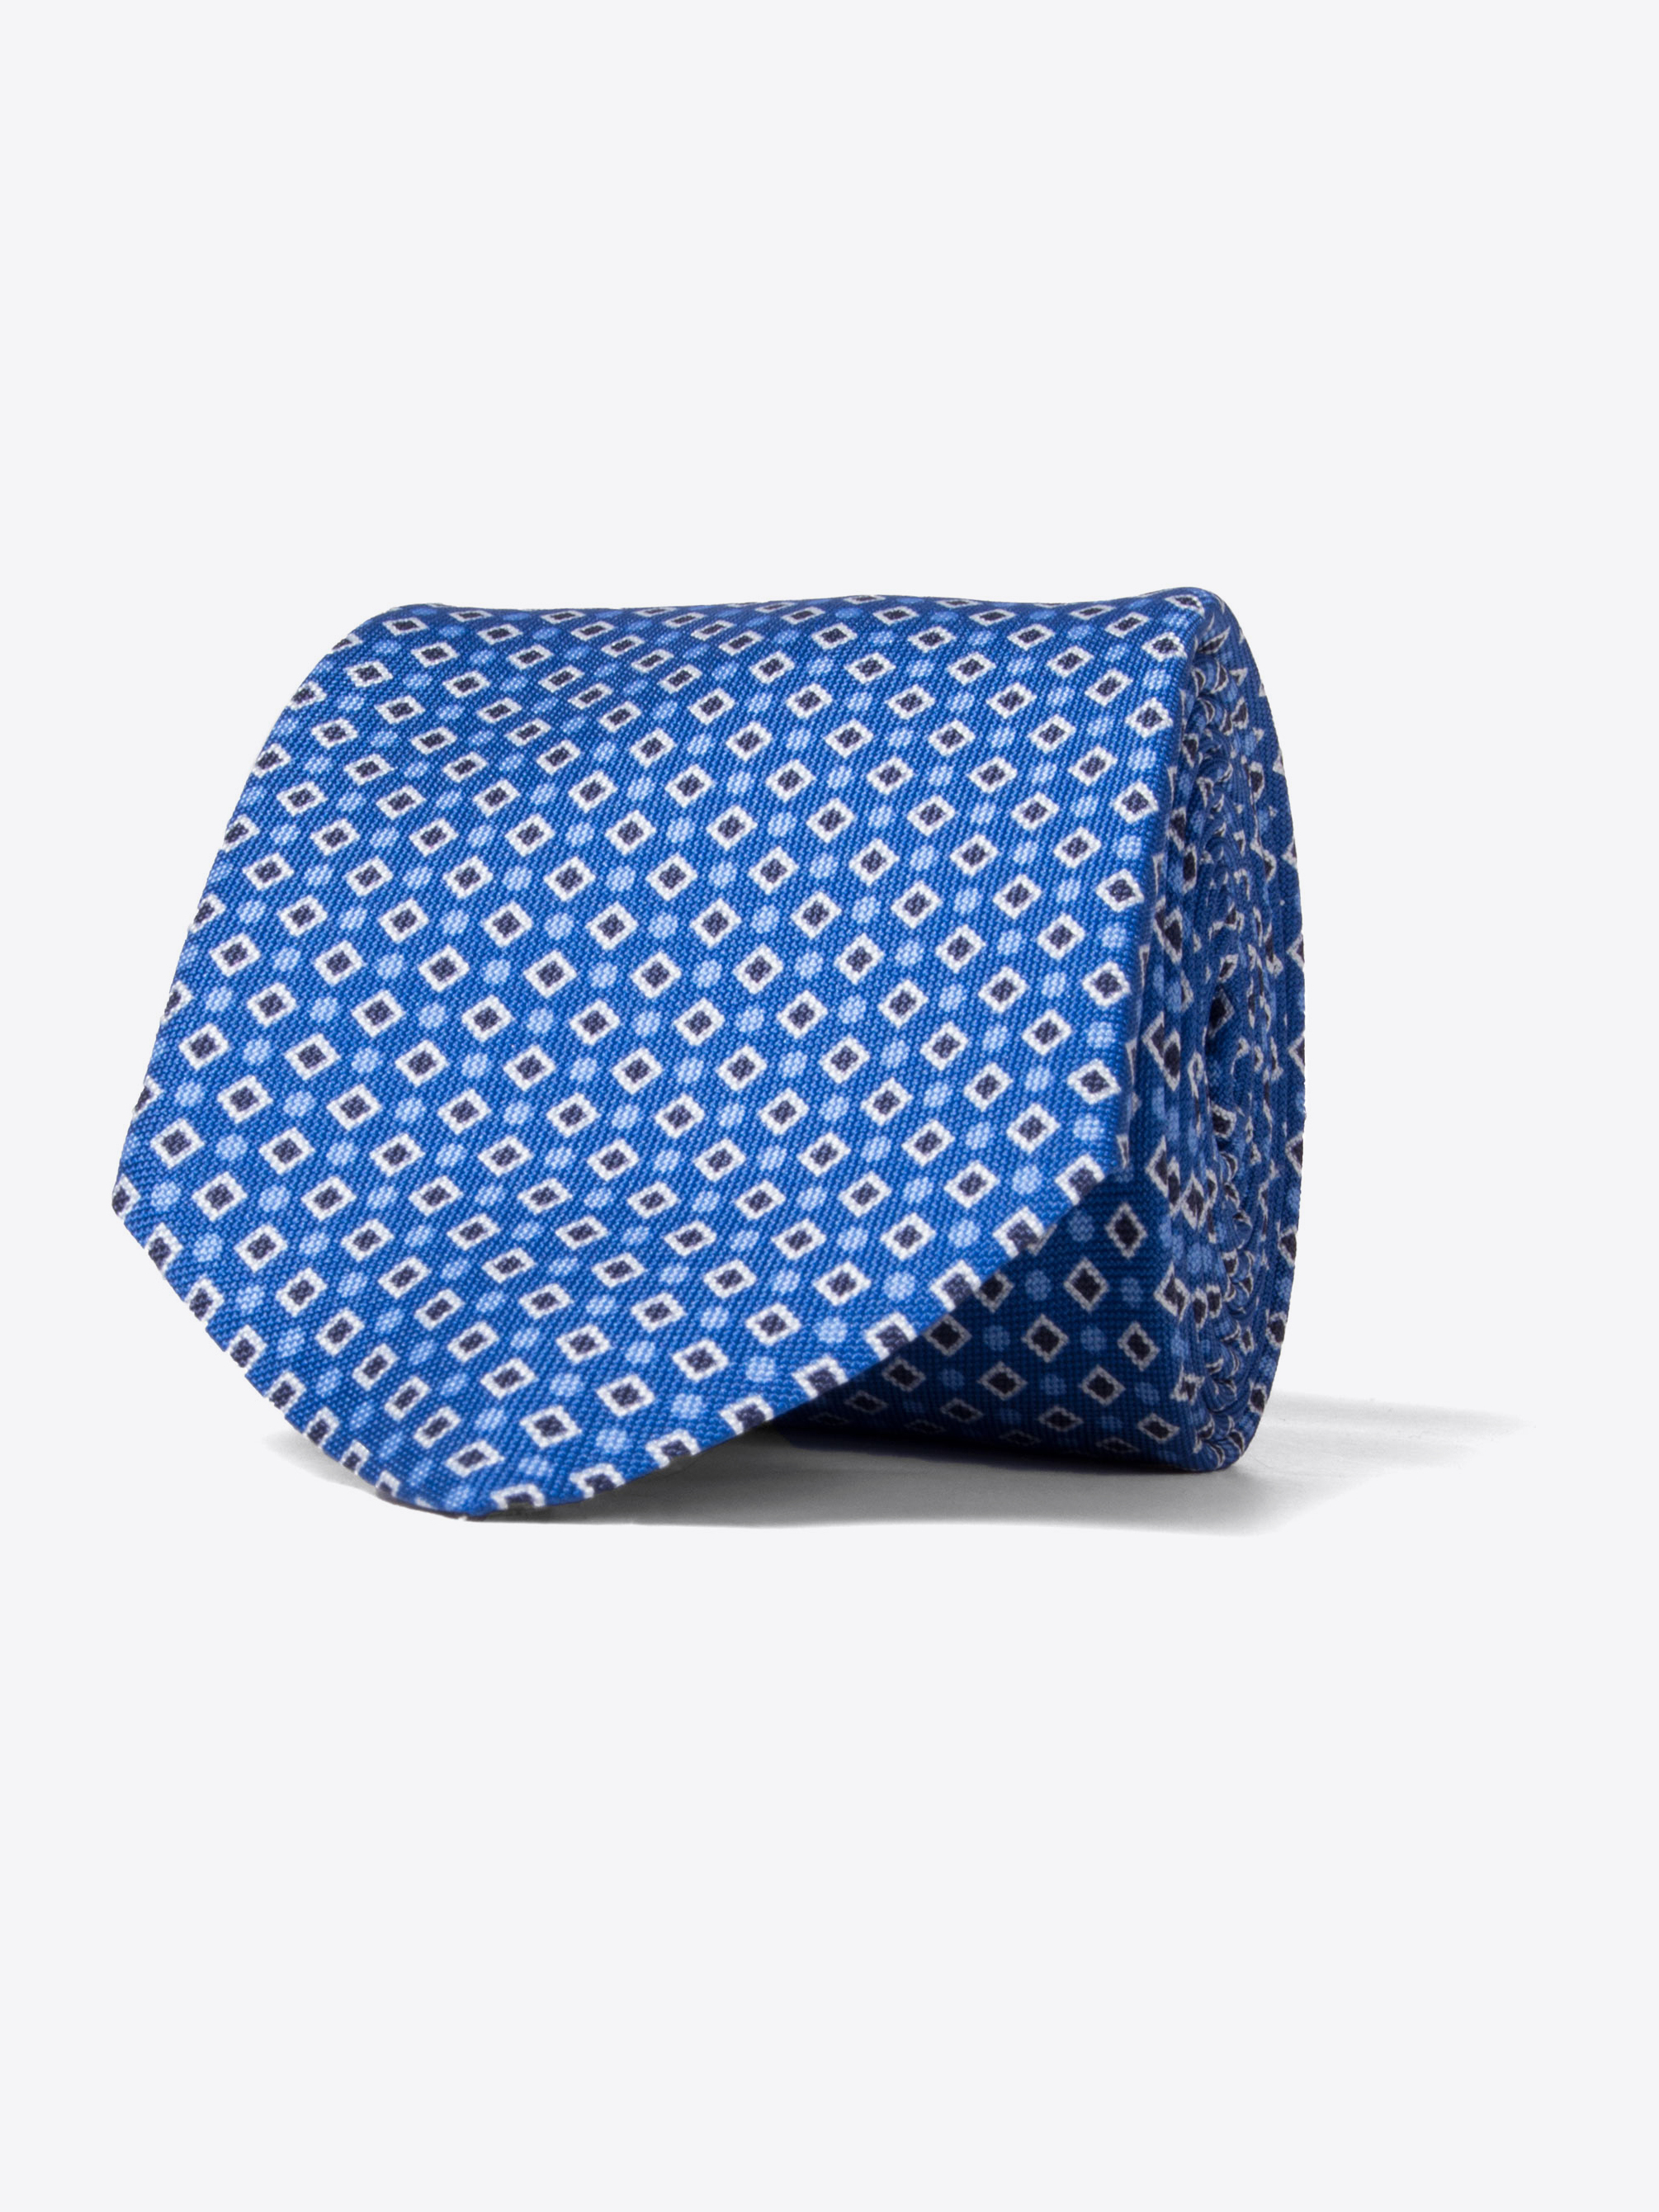 Zoom Image of Alassio Blue Print Tie